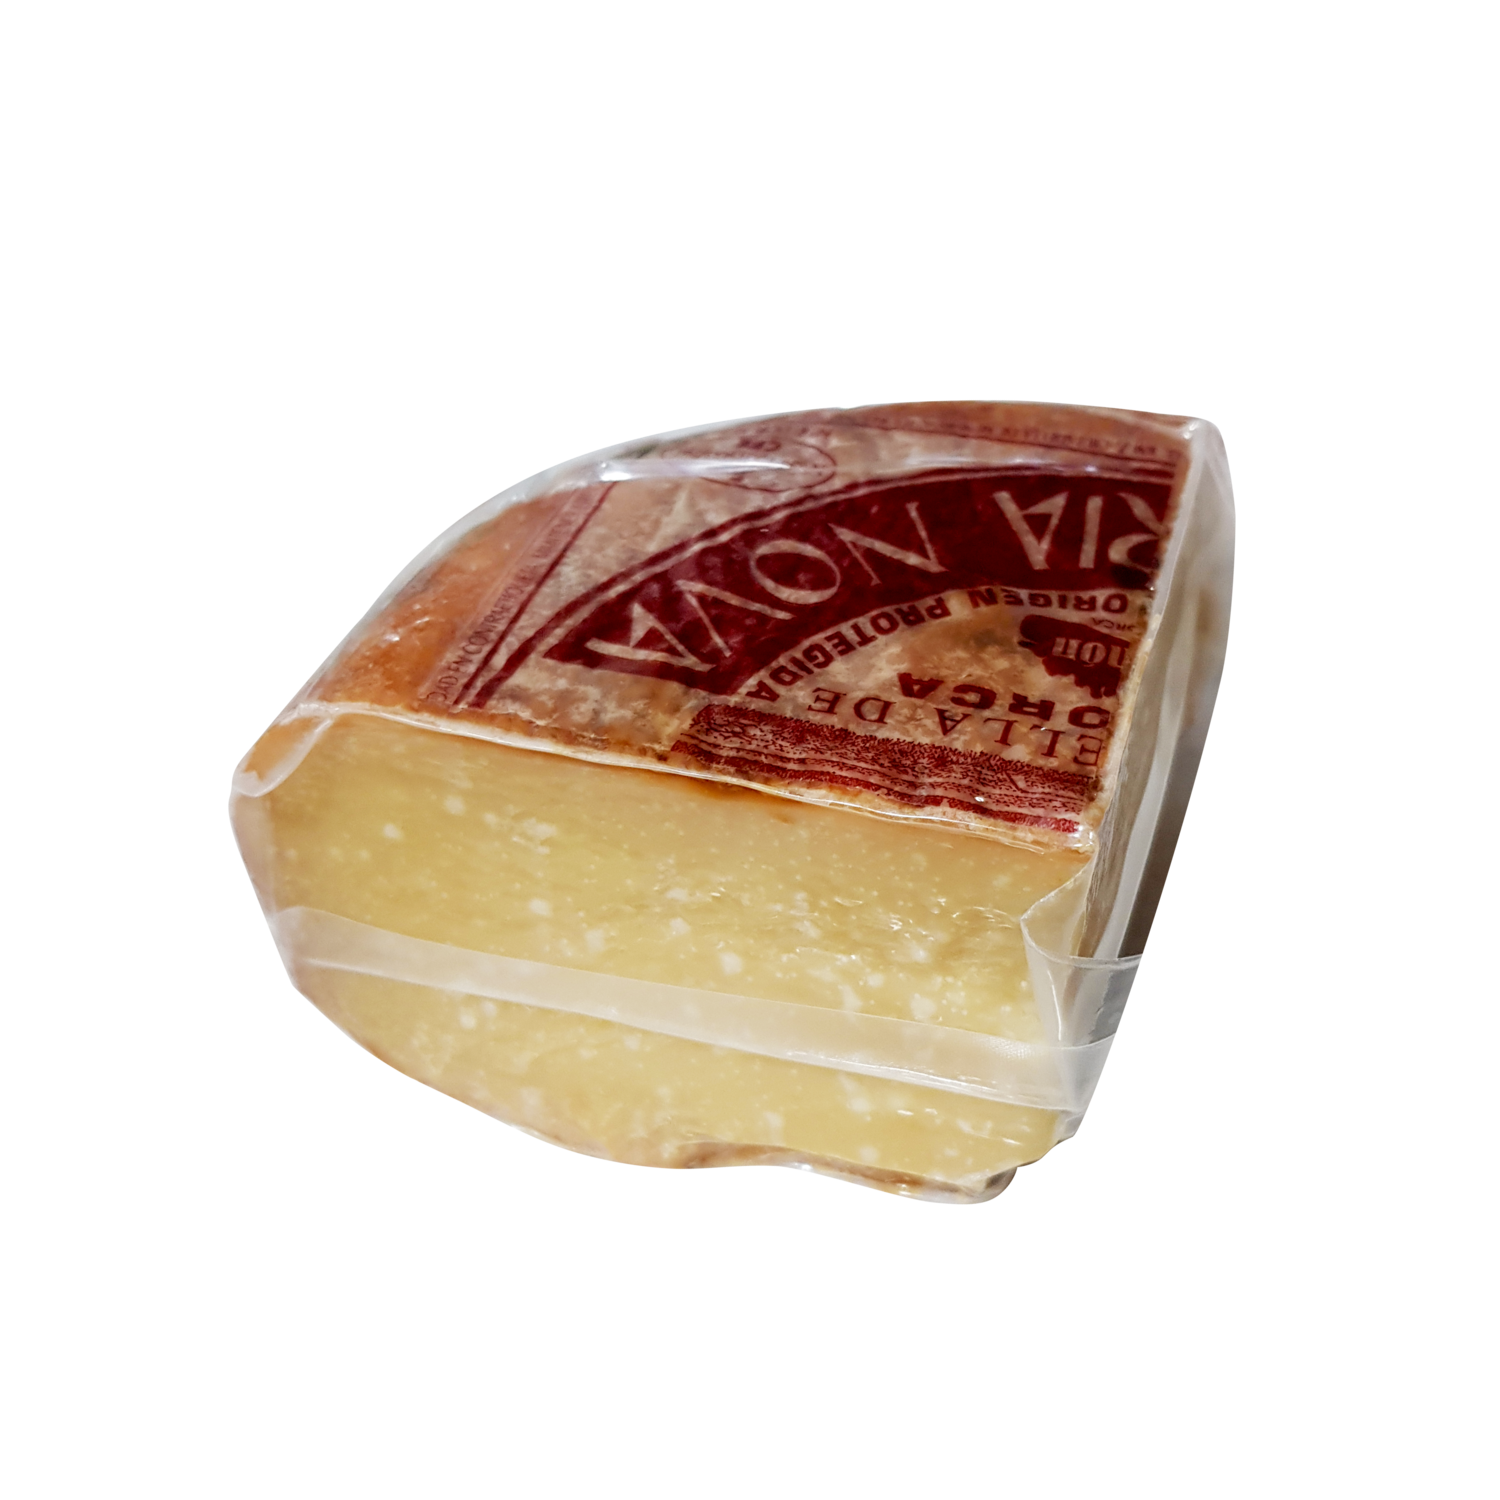 Cavalleria Nova Cured Mahon Wedge Cheese (Approx. 180g)